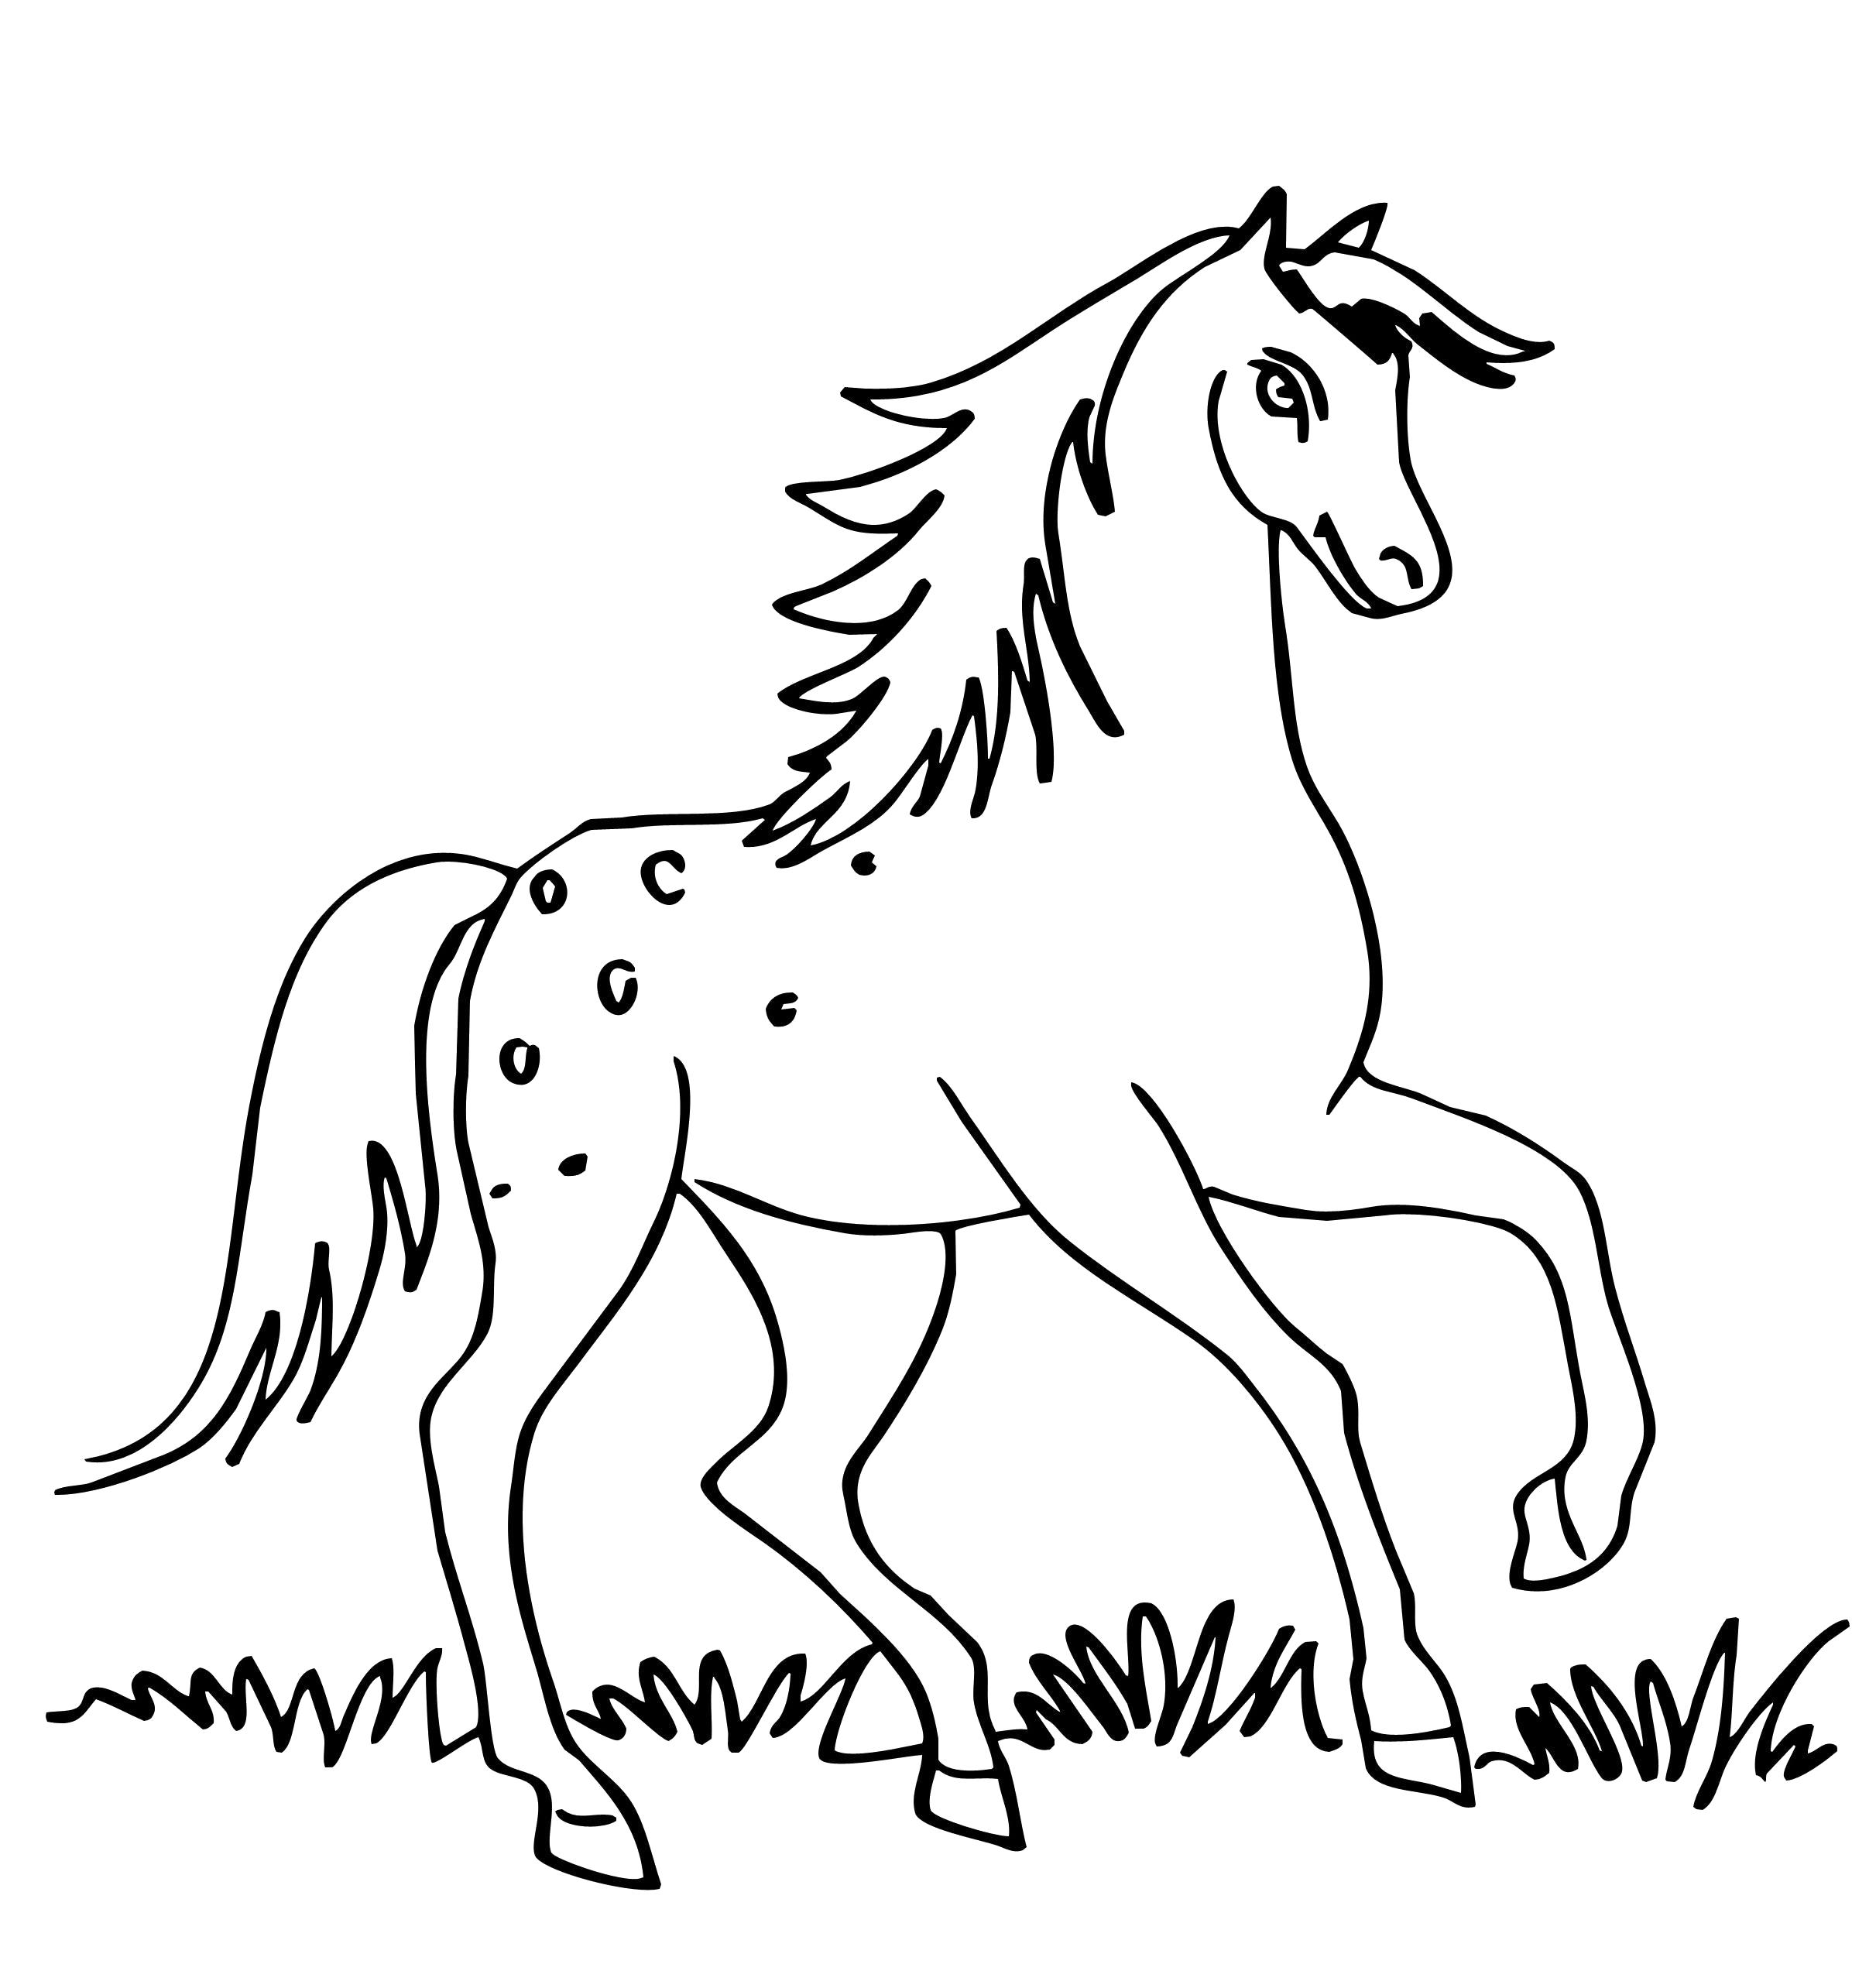 Название: Раскраска лошадка. Категория: Лошадка. Теги: Лошадка.